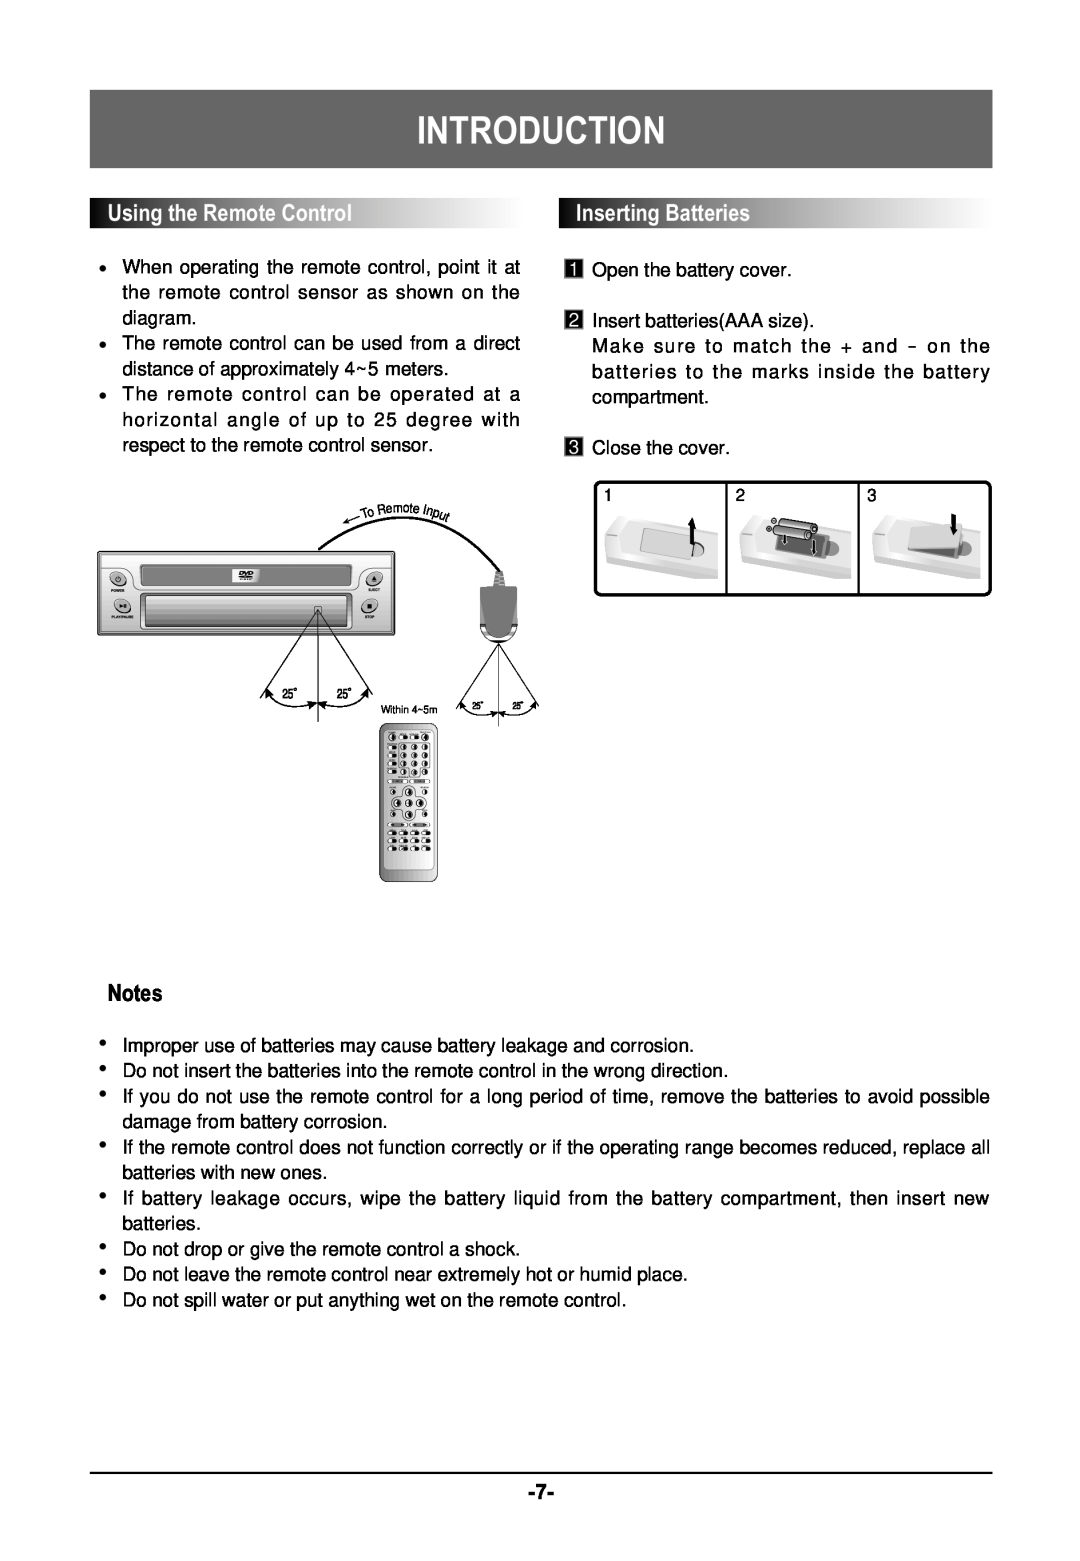 Farenheit Technologies DVD-19 owner manual UsingtheRemoteControl, InsertingBatteries, Introduction 